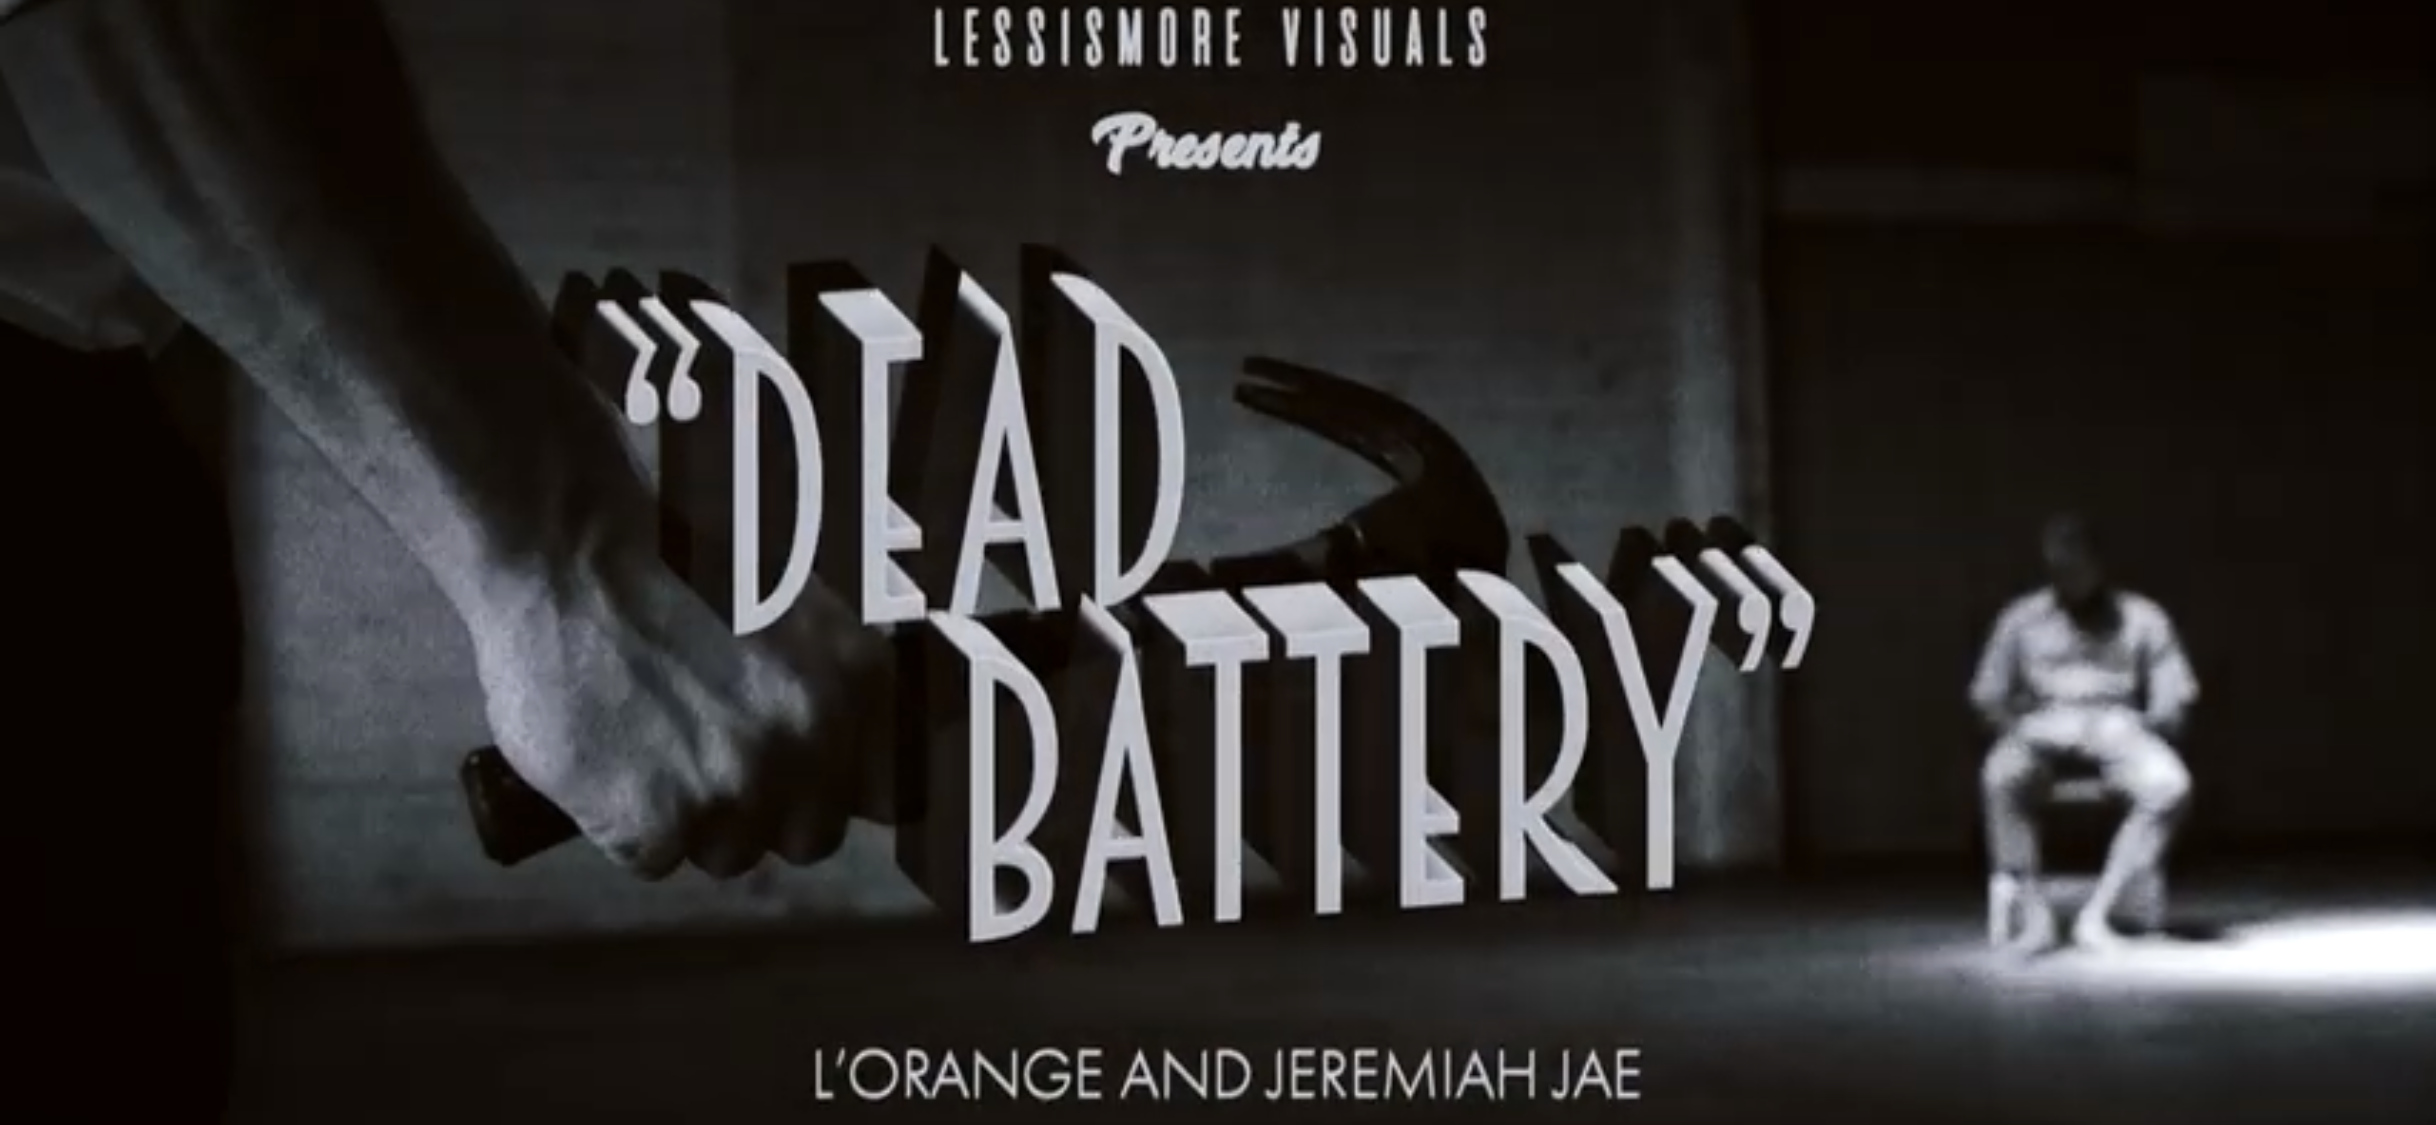 L'Orange & Jeremiah Jae - Dead Battery | Official Video